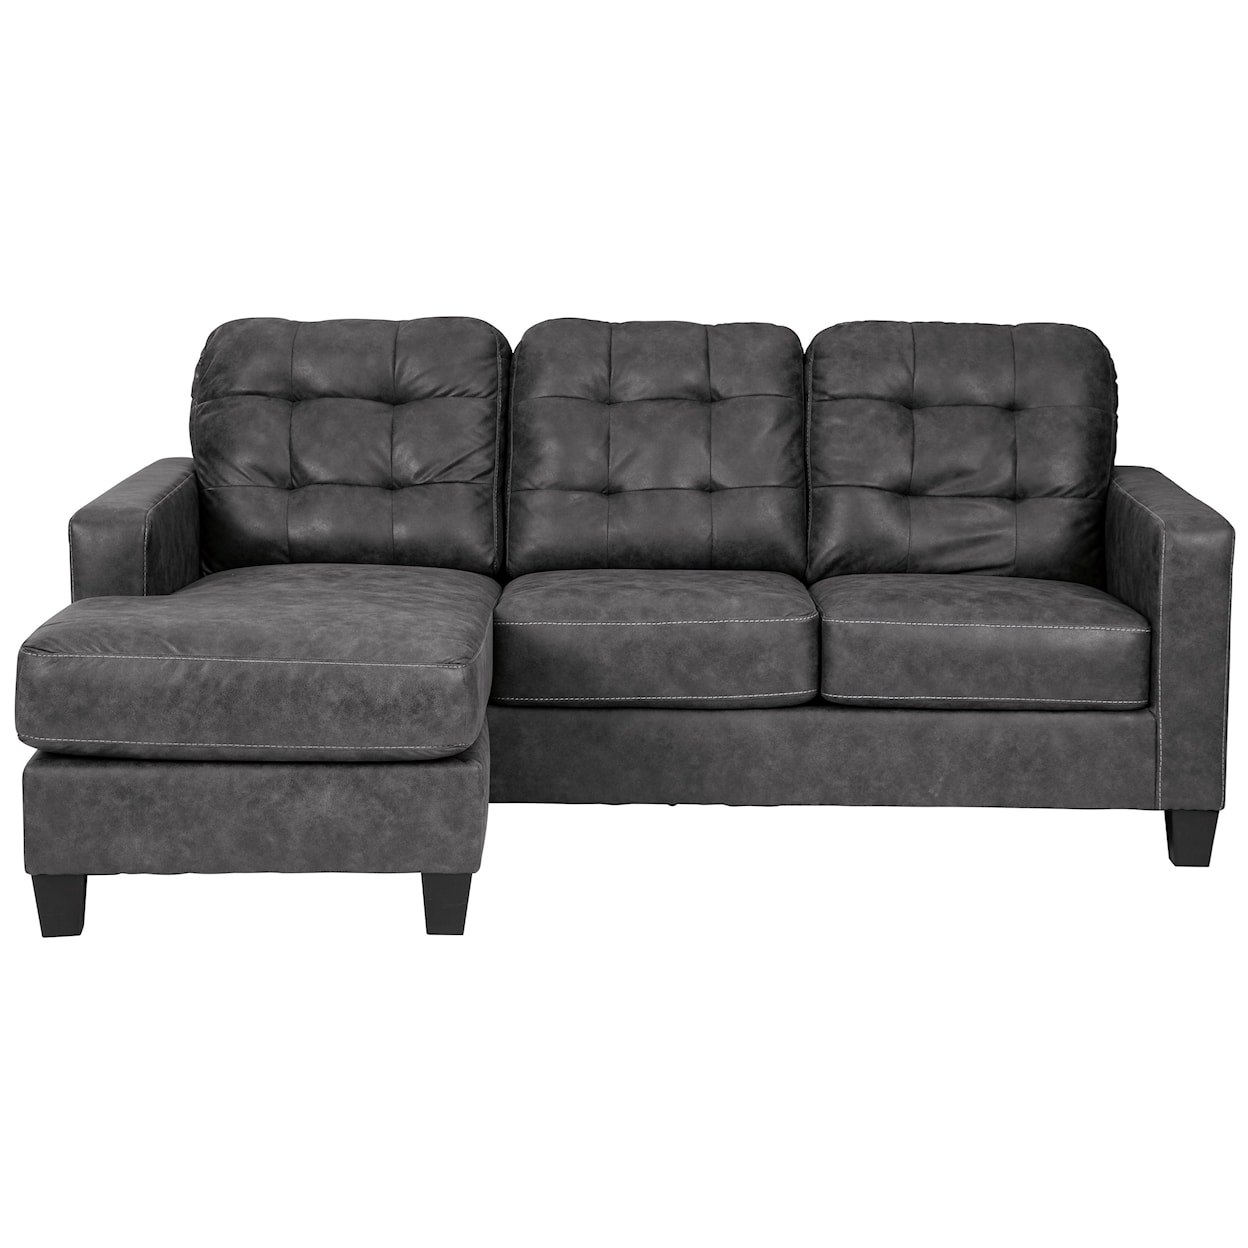 Benchcraft Venaldi Sofa with Chaise